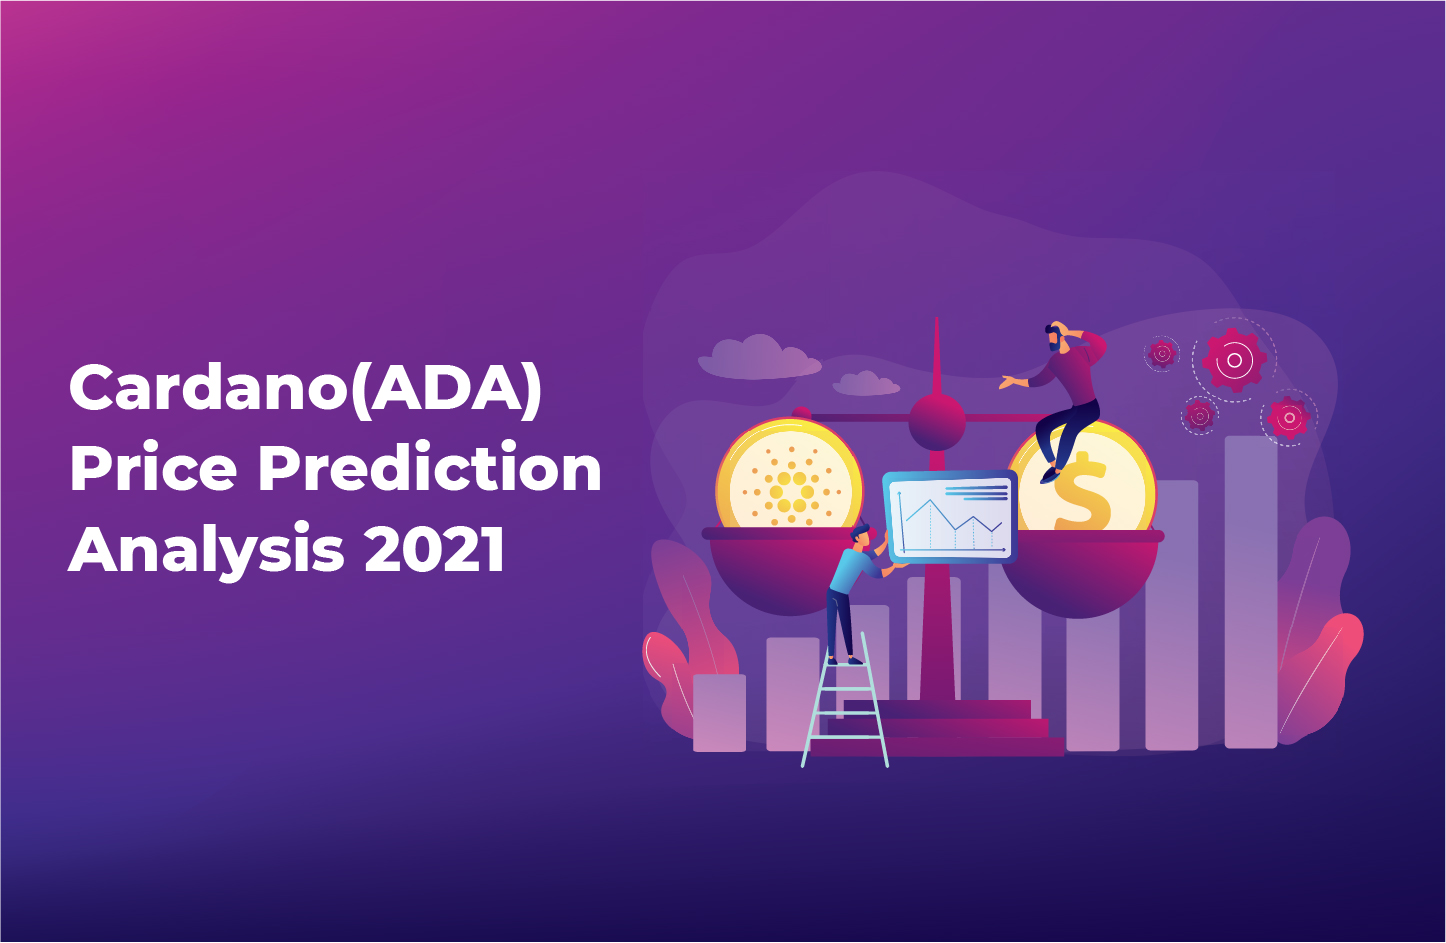 Cardano(ADA) Price Forecast 2021